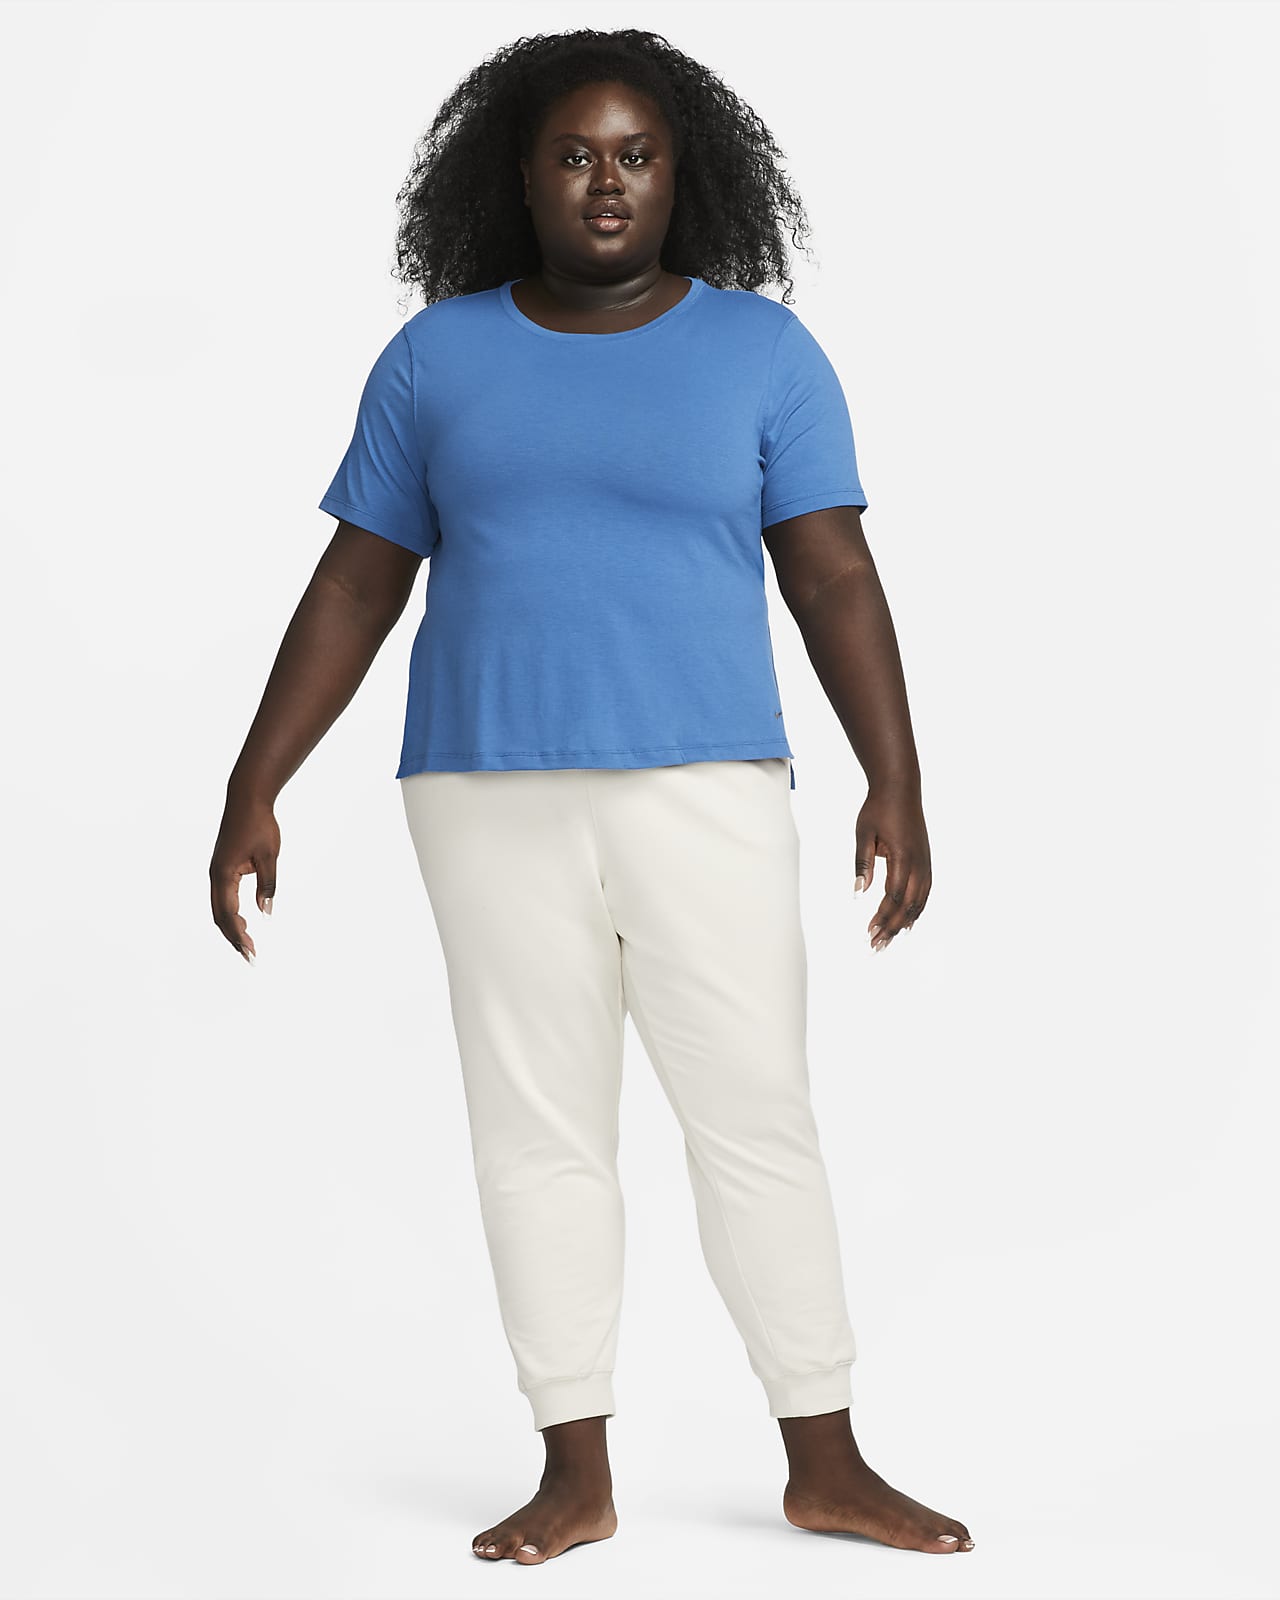 Nike Yoga Dri-FIT Women's Top (Plus Size).